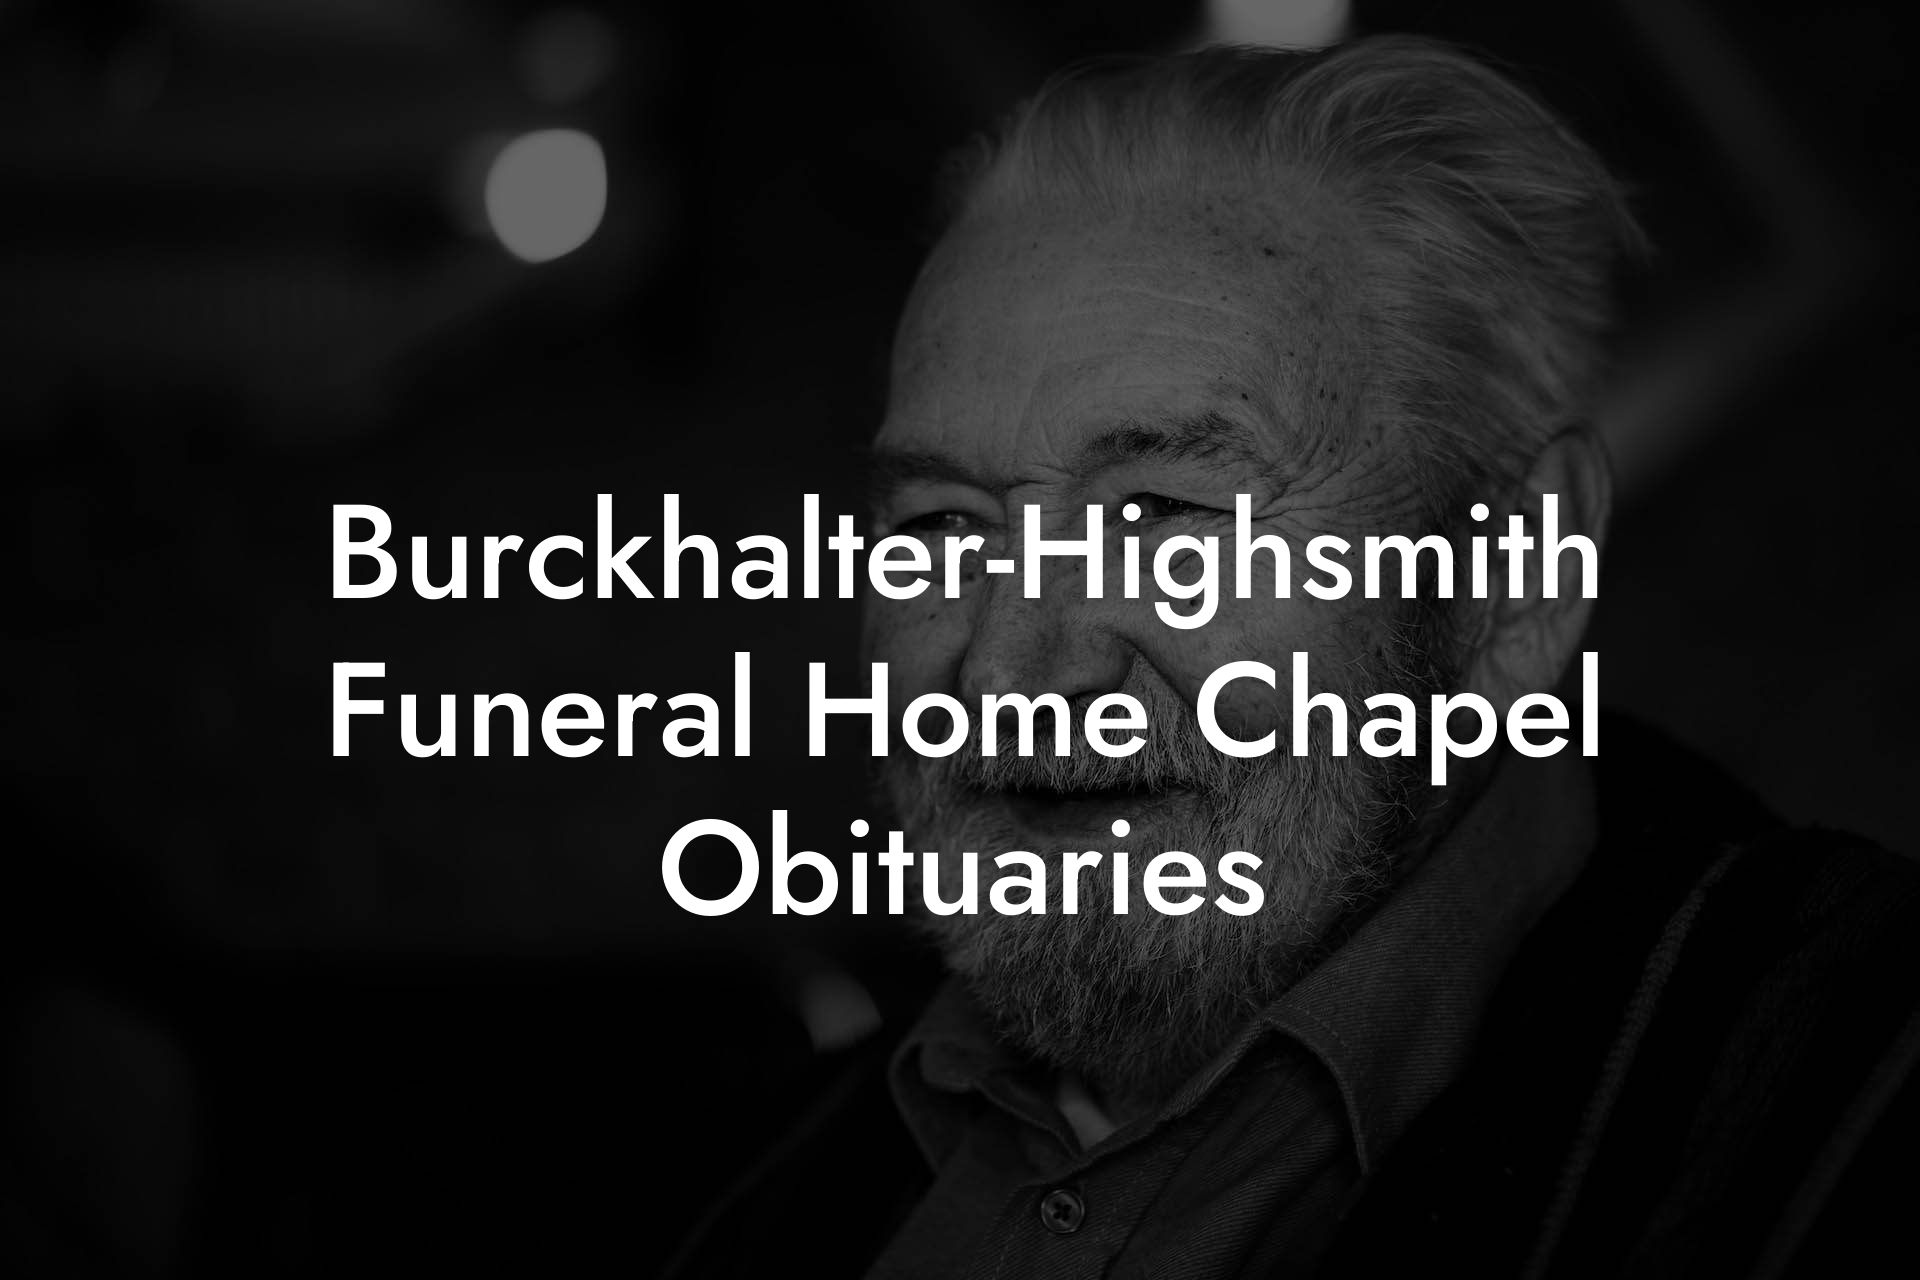 Burckhalter-Highsmith Funeral Home Chapel Obituaries